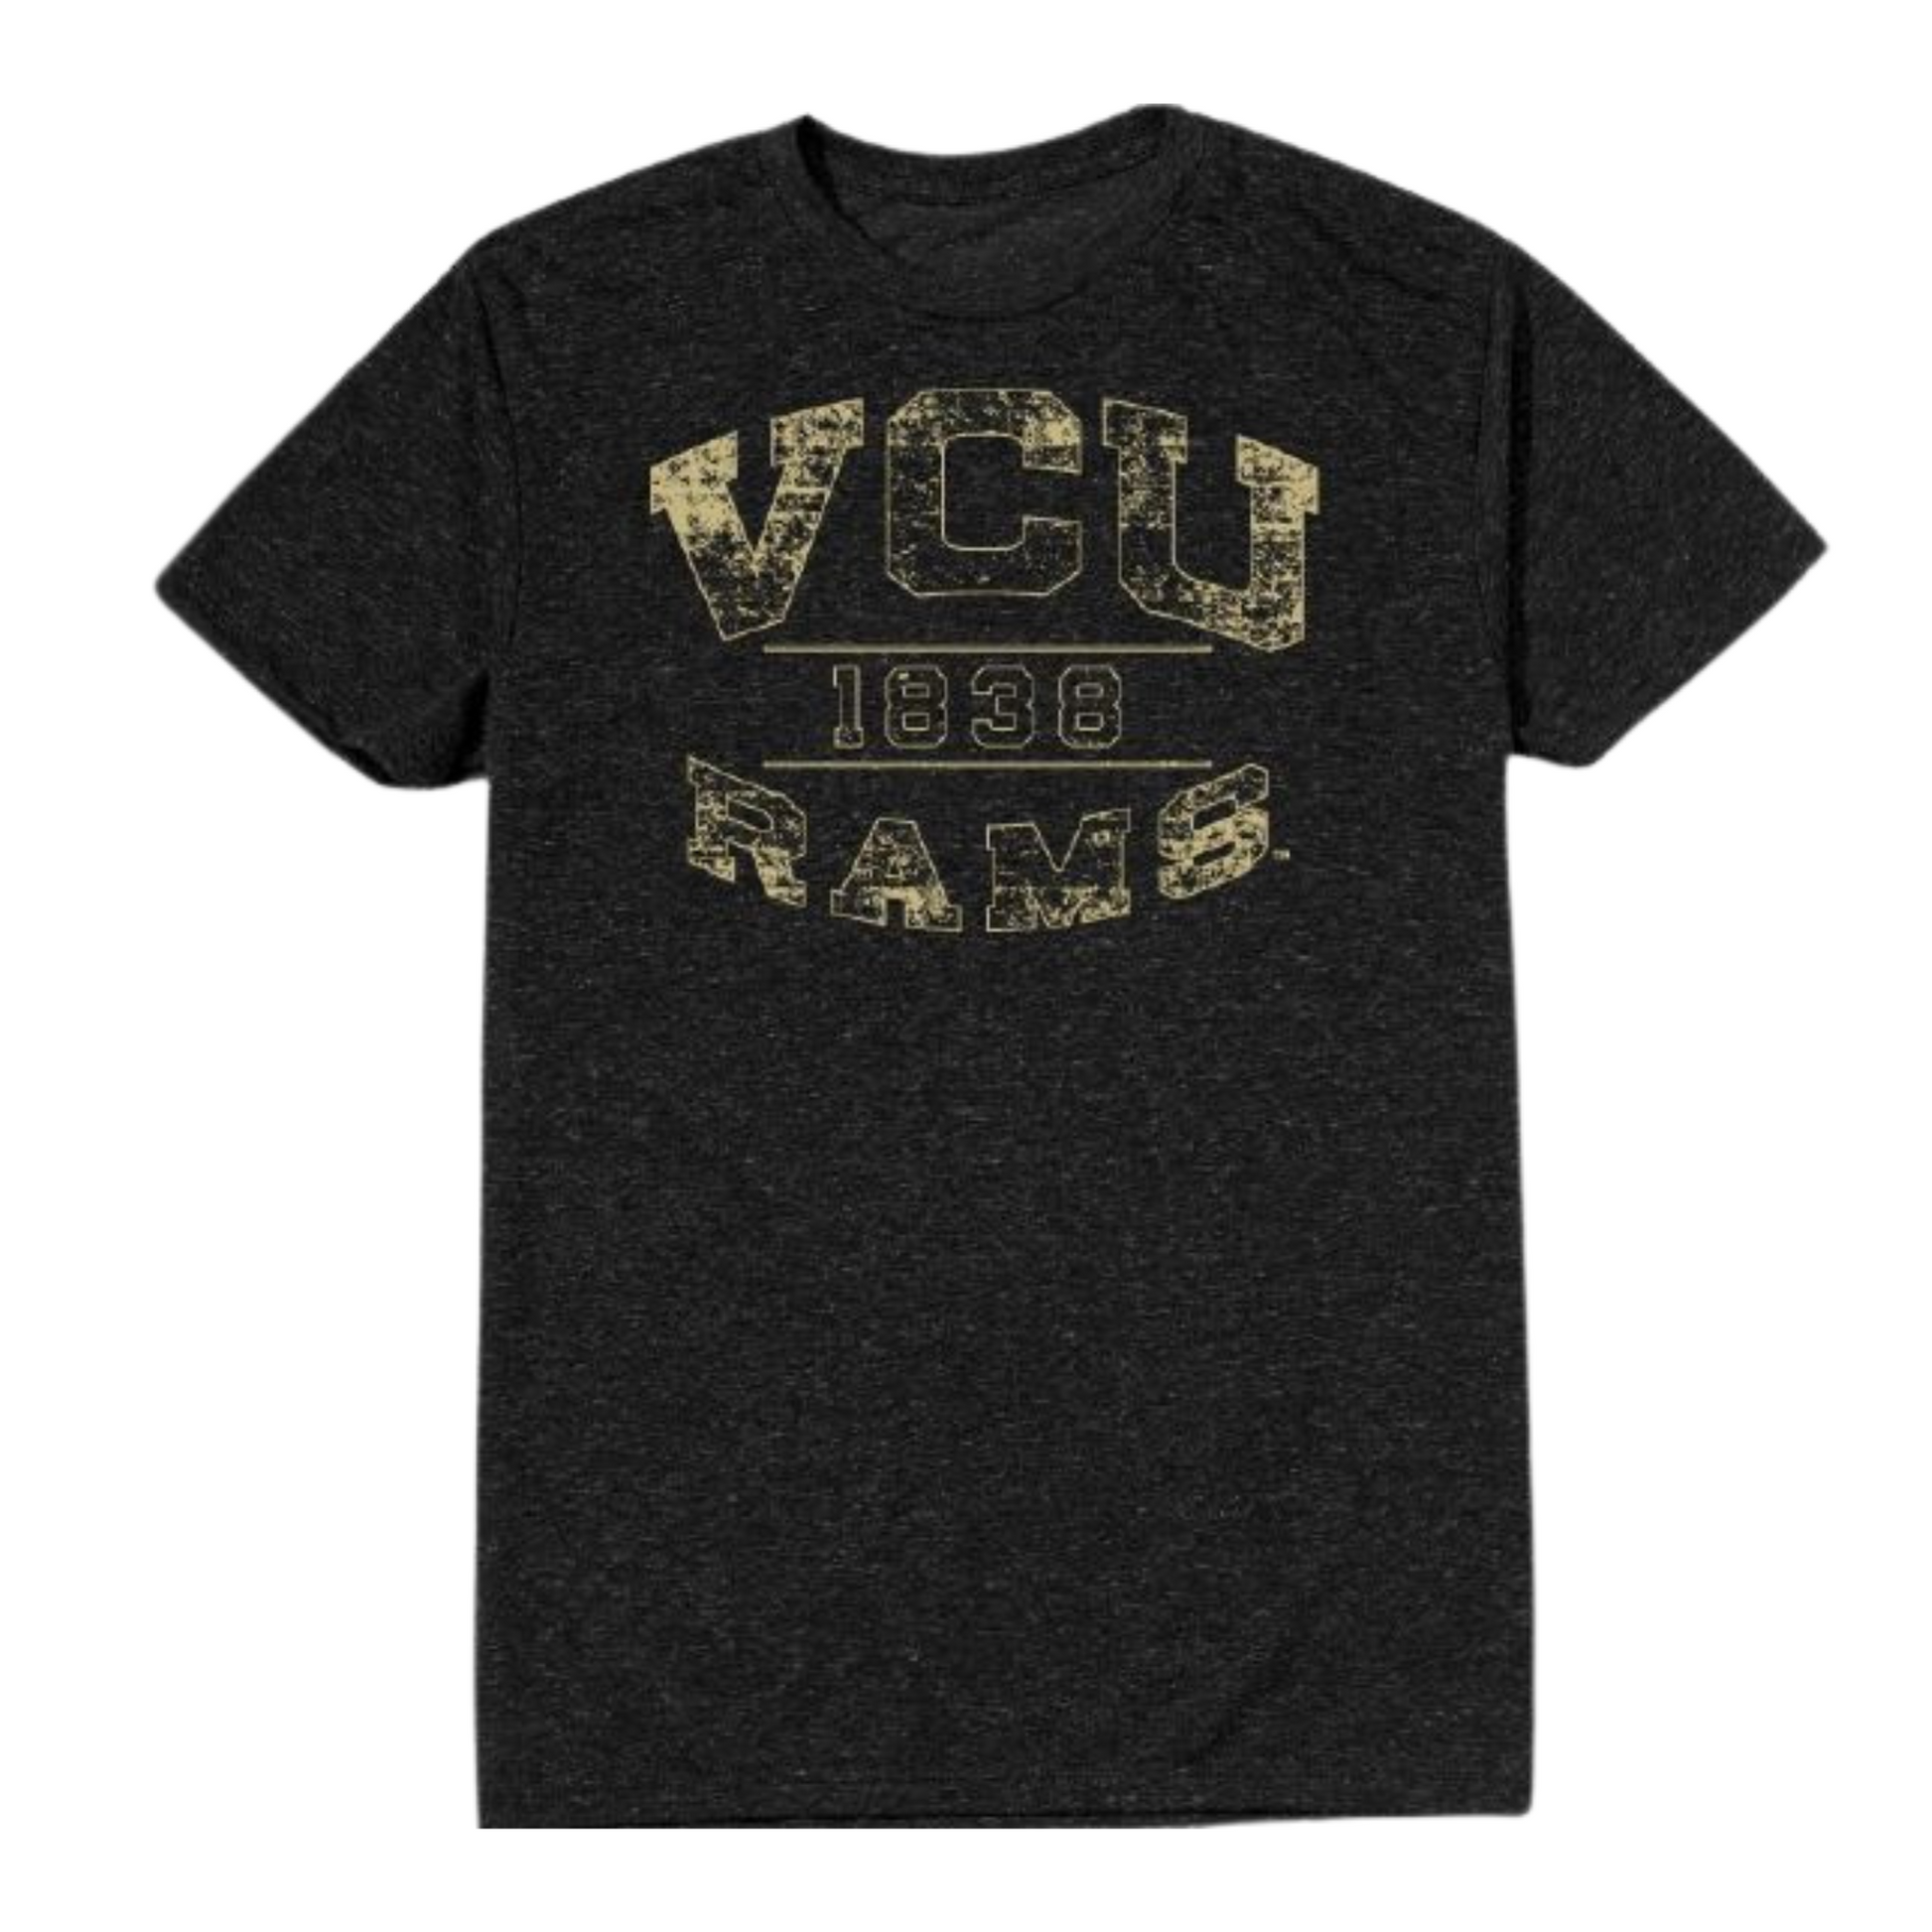 VCU Arlo Fleck T-shirt - Virginia Book Company